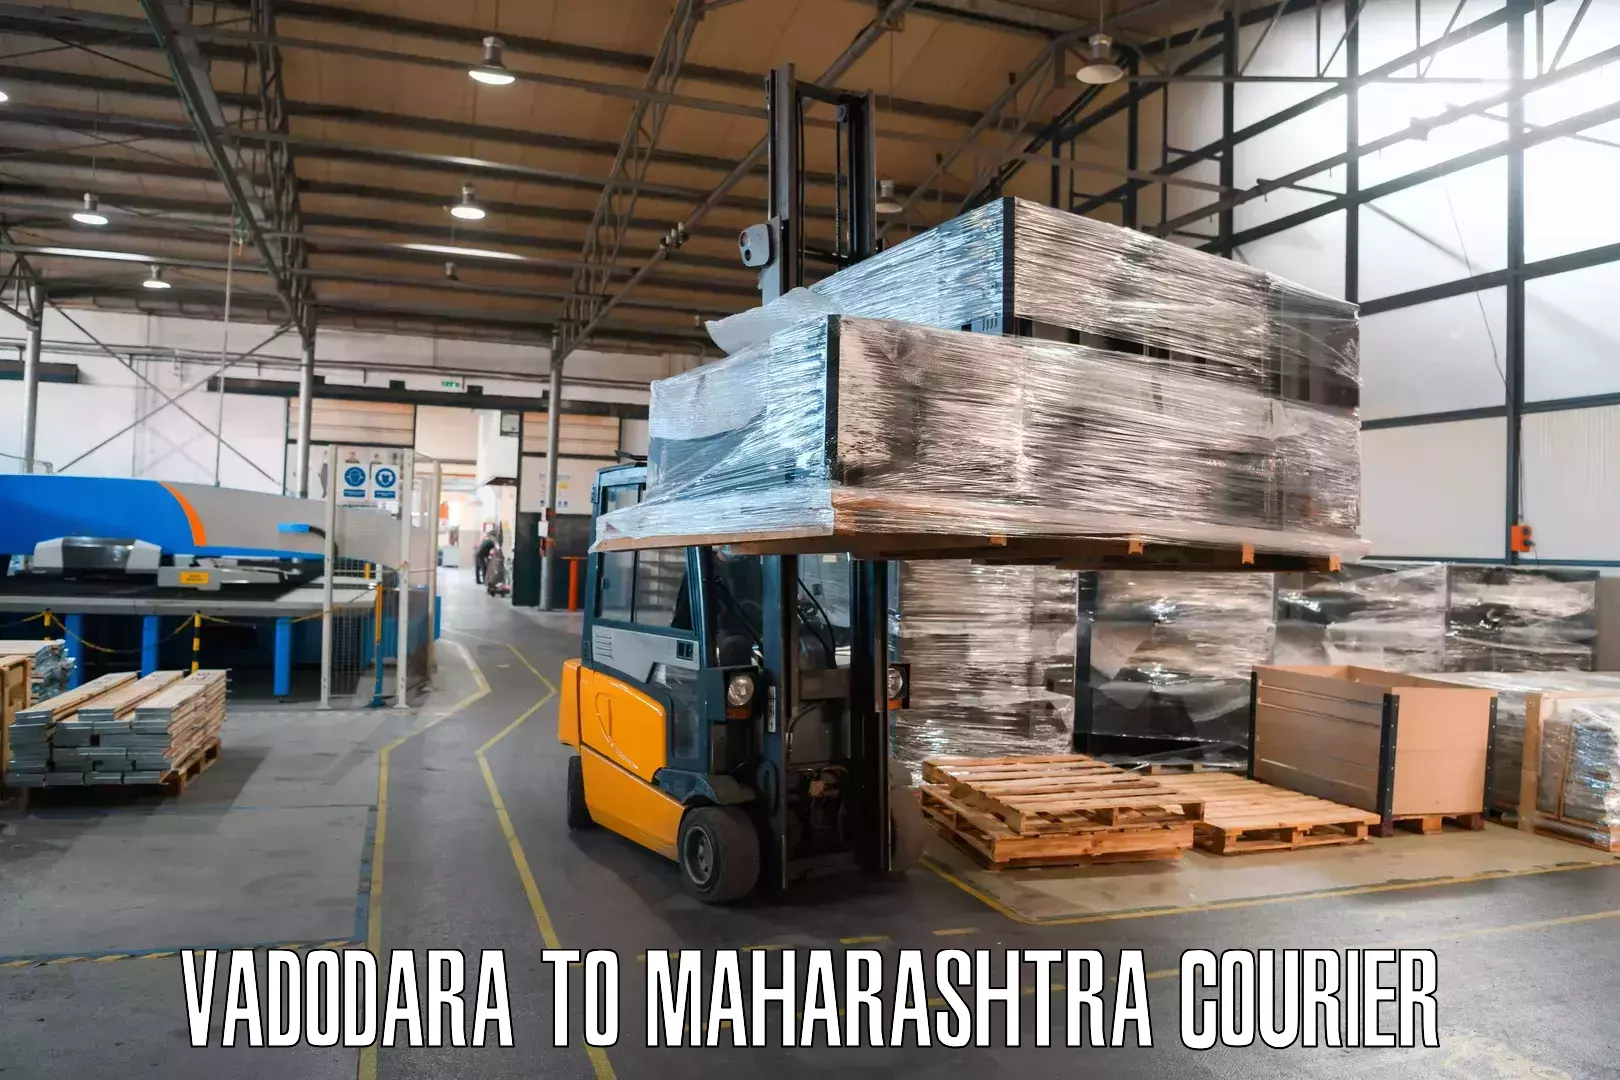 Courier service partnerships Vadodara to Wardha